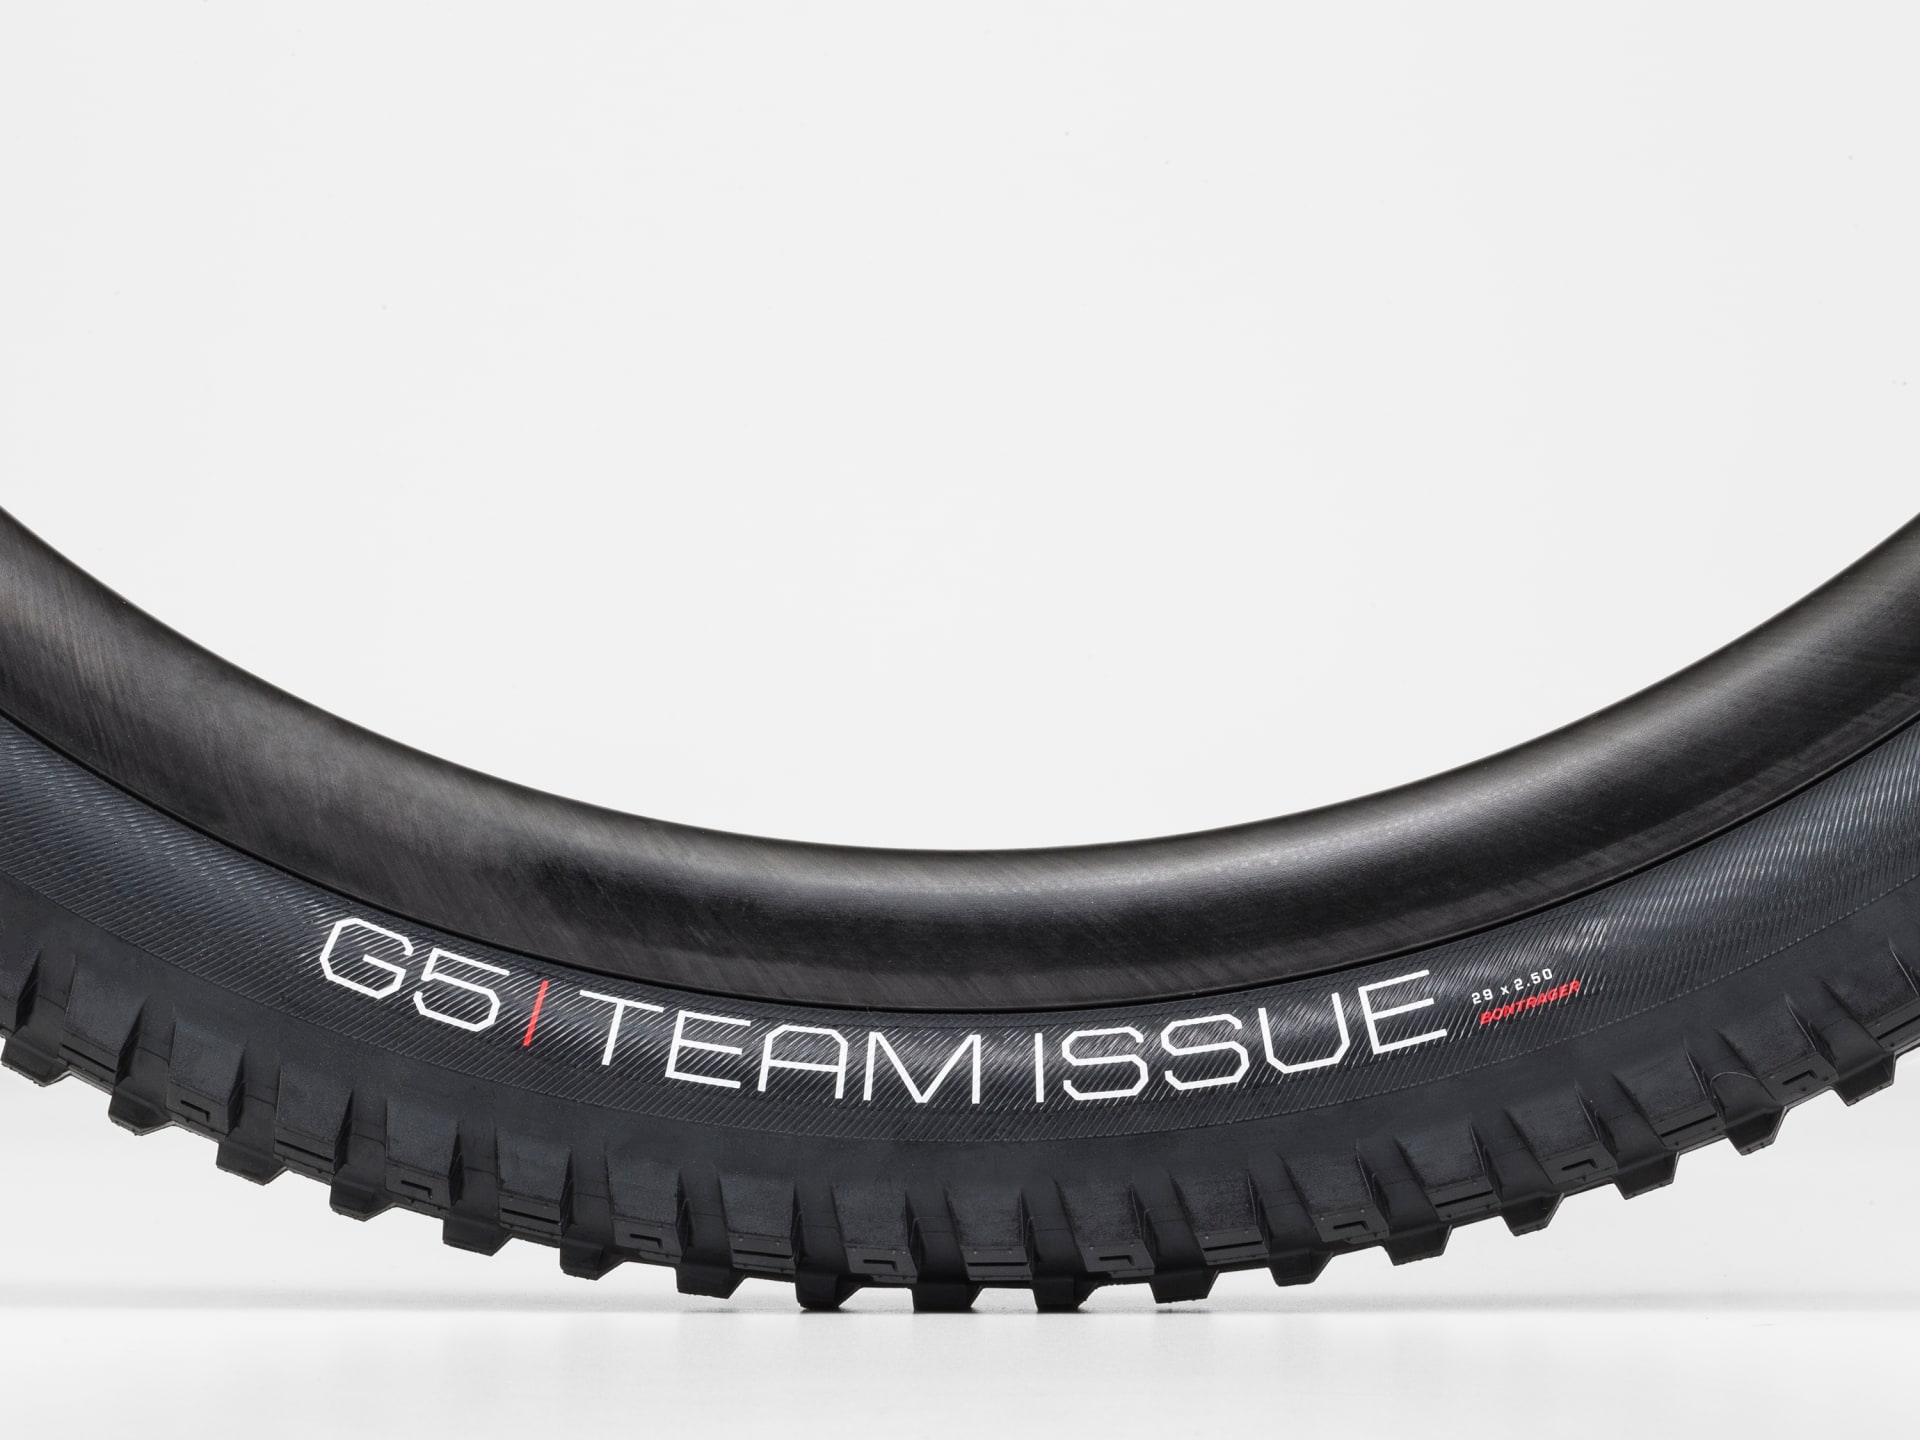 Bontrager G5 Team Issue MTB Tire